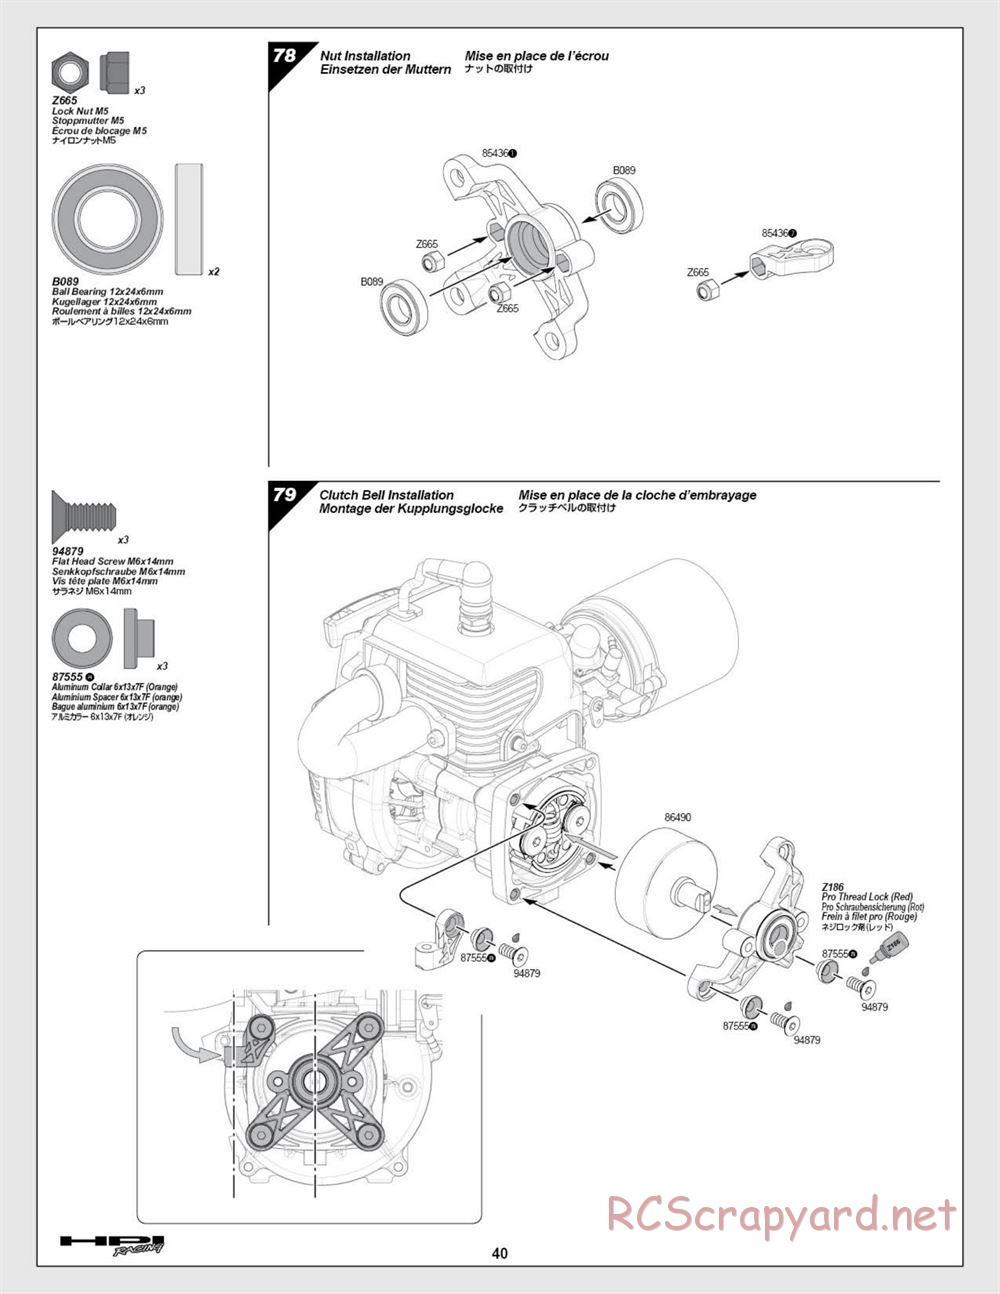 HPI - Baja 5b SS - Manual - Page 40